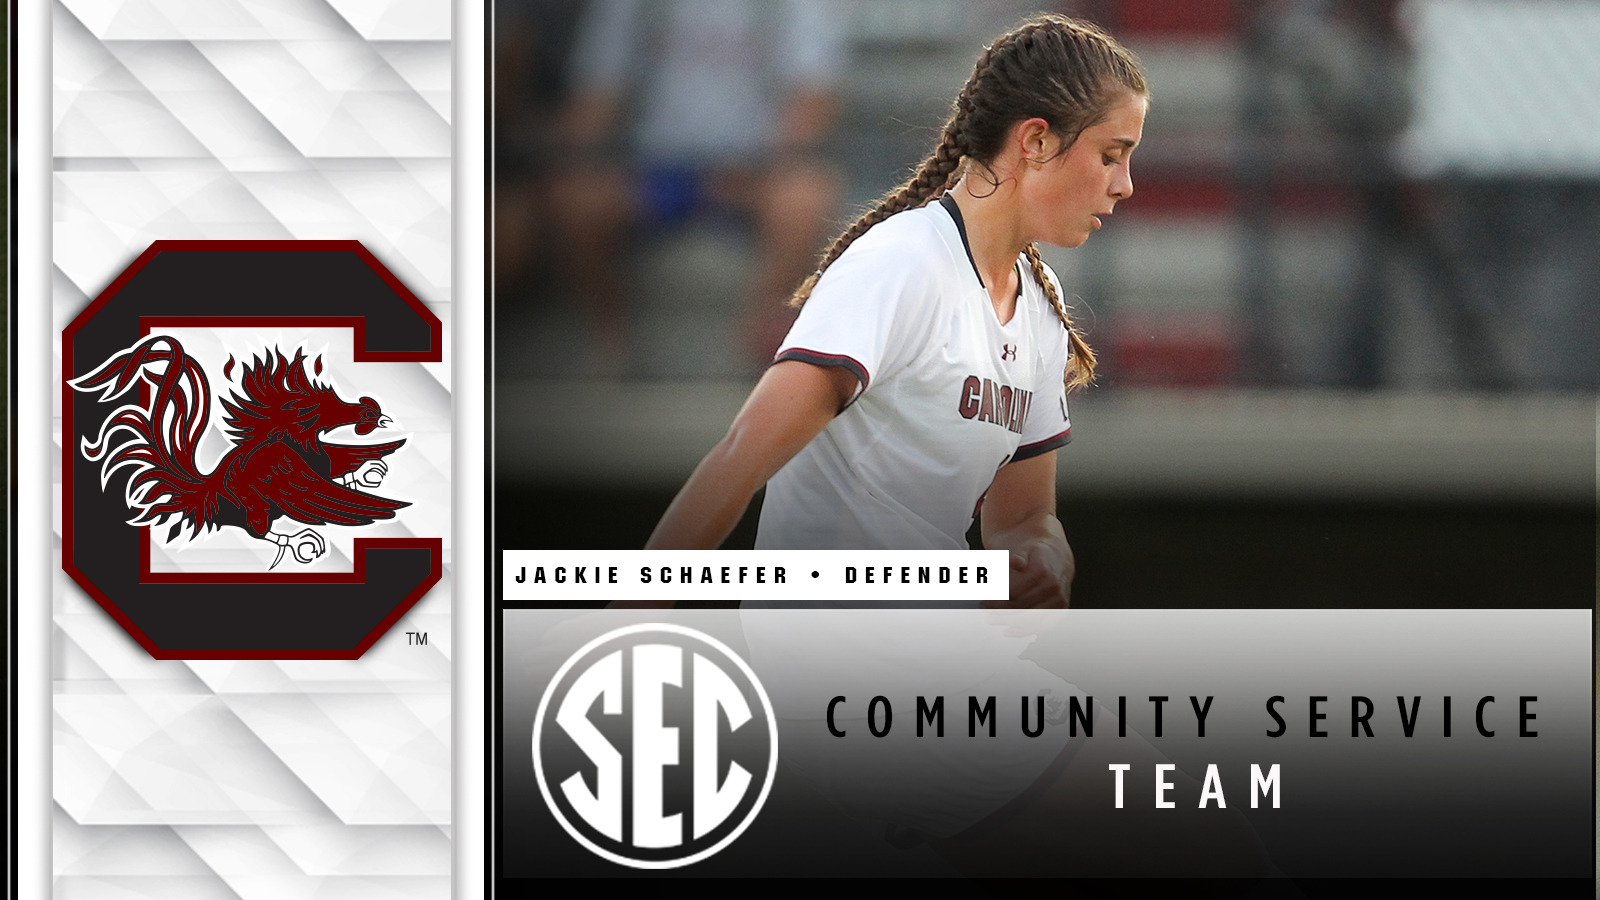 Jackie Schaefer Named To SEC Community Service Team